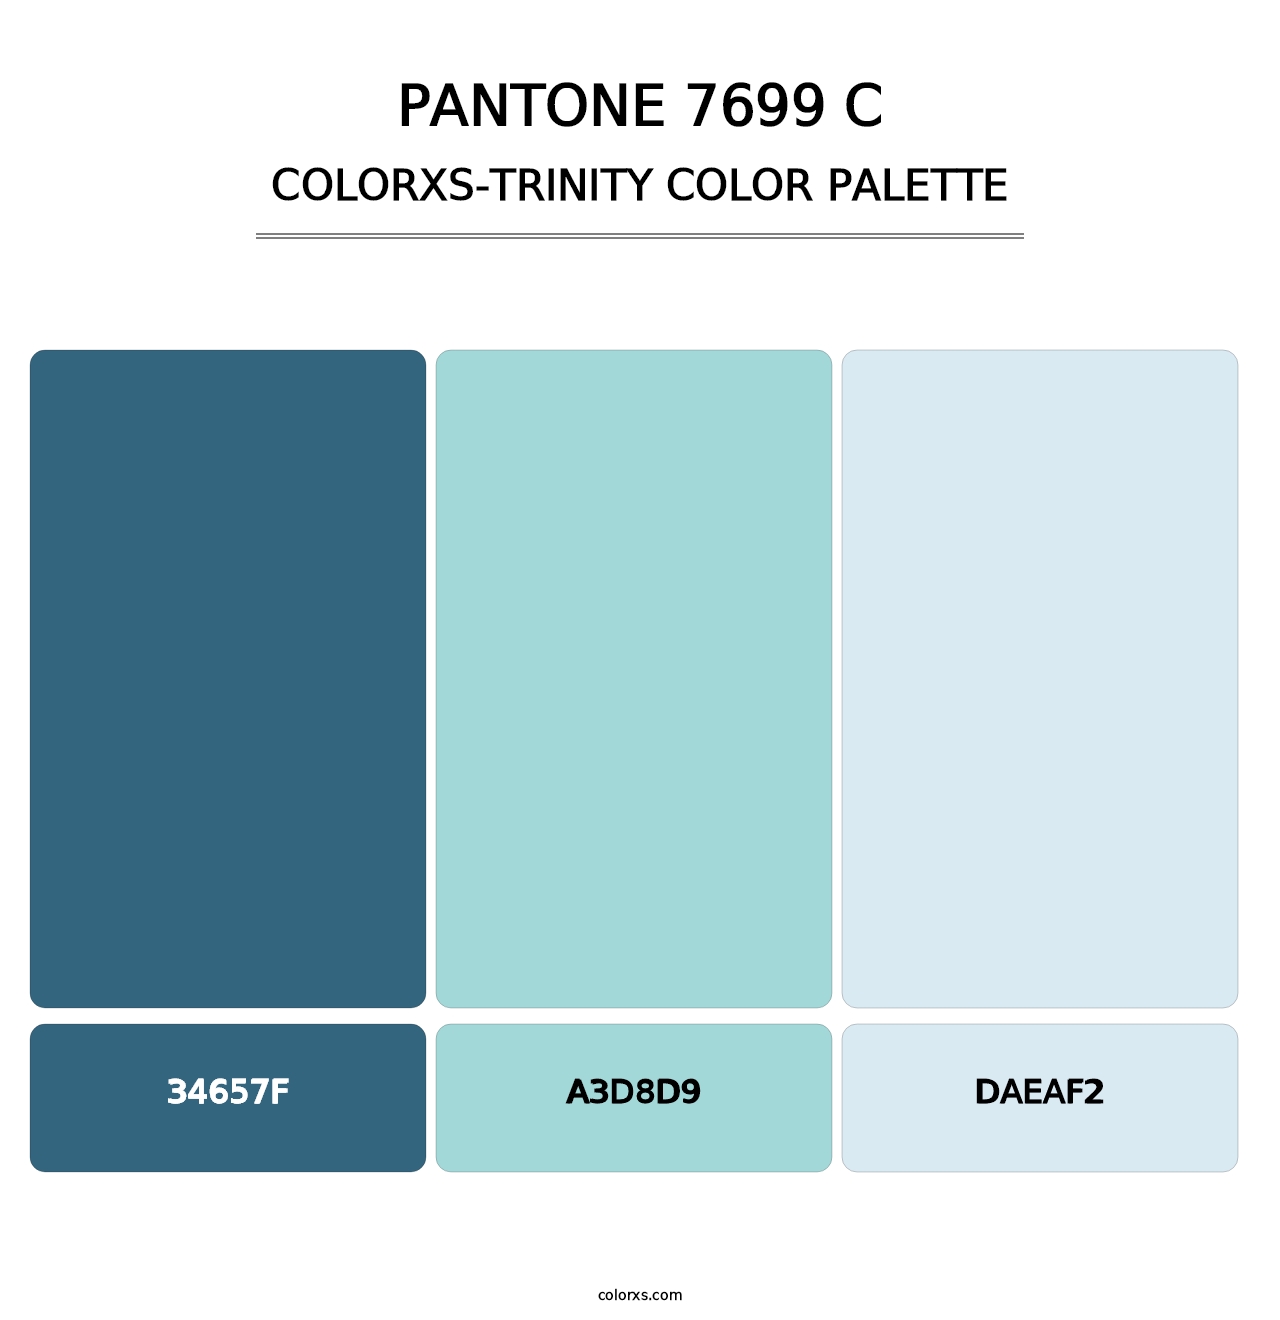 PANTONE 7699 C - Colorxs Trinity Palette